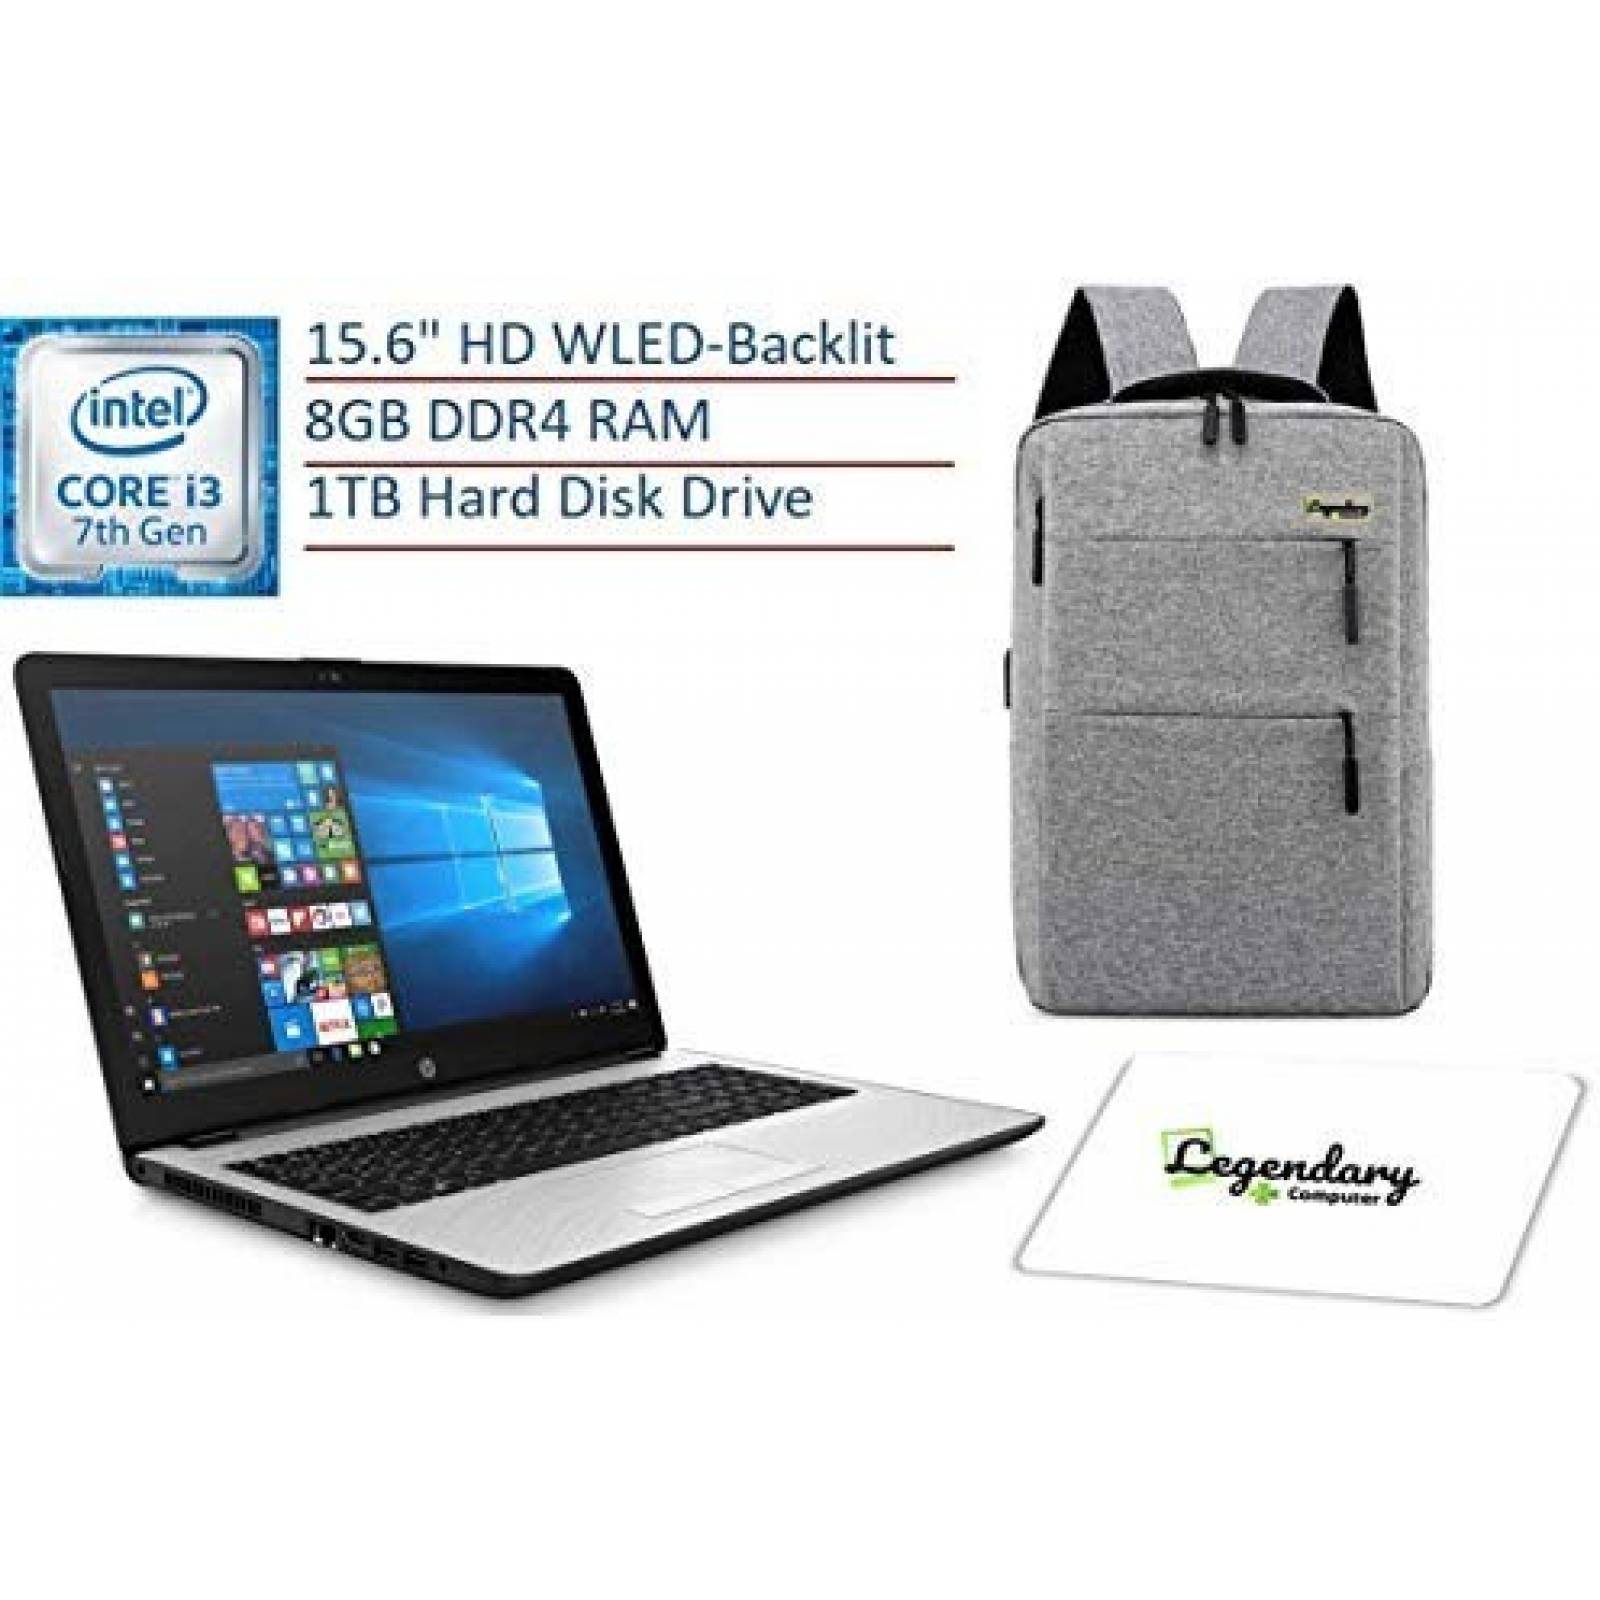 Pack laptop HP 2019 15.6" 8GB RAM 1TB HDD+ mochila y mouse